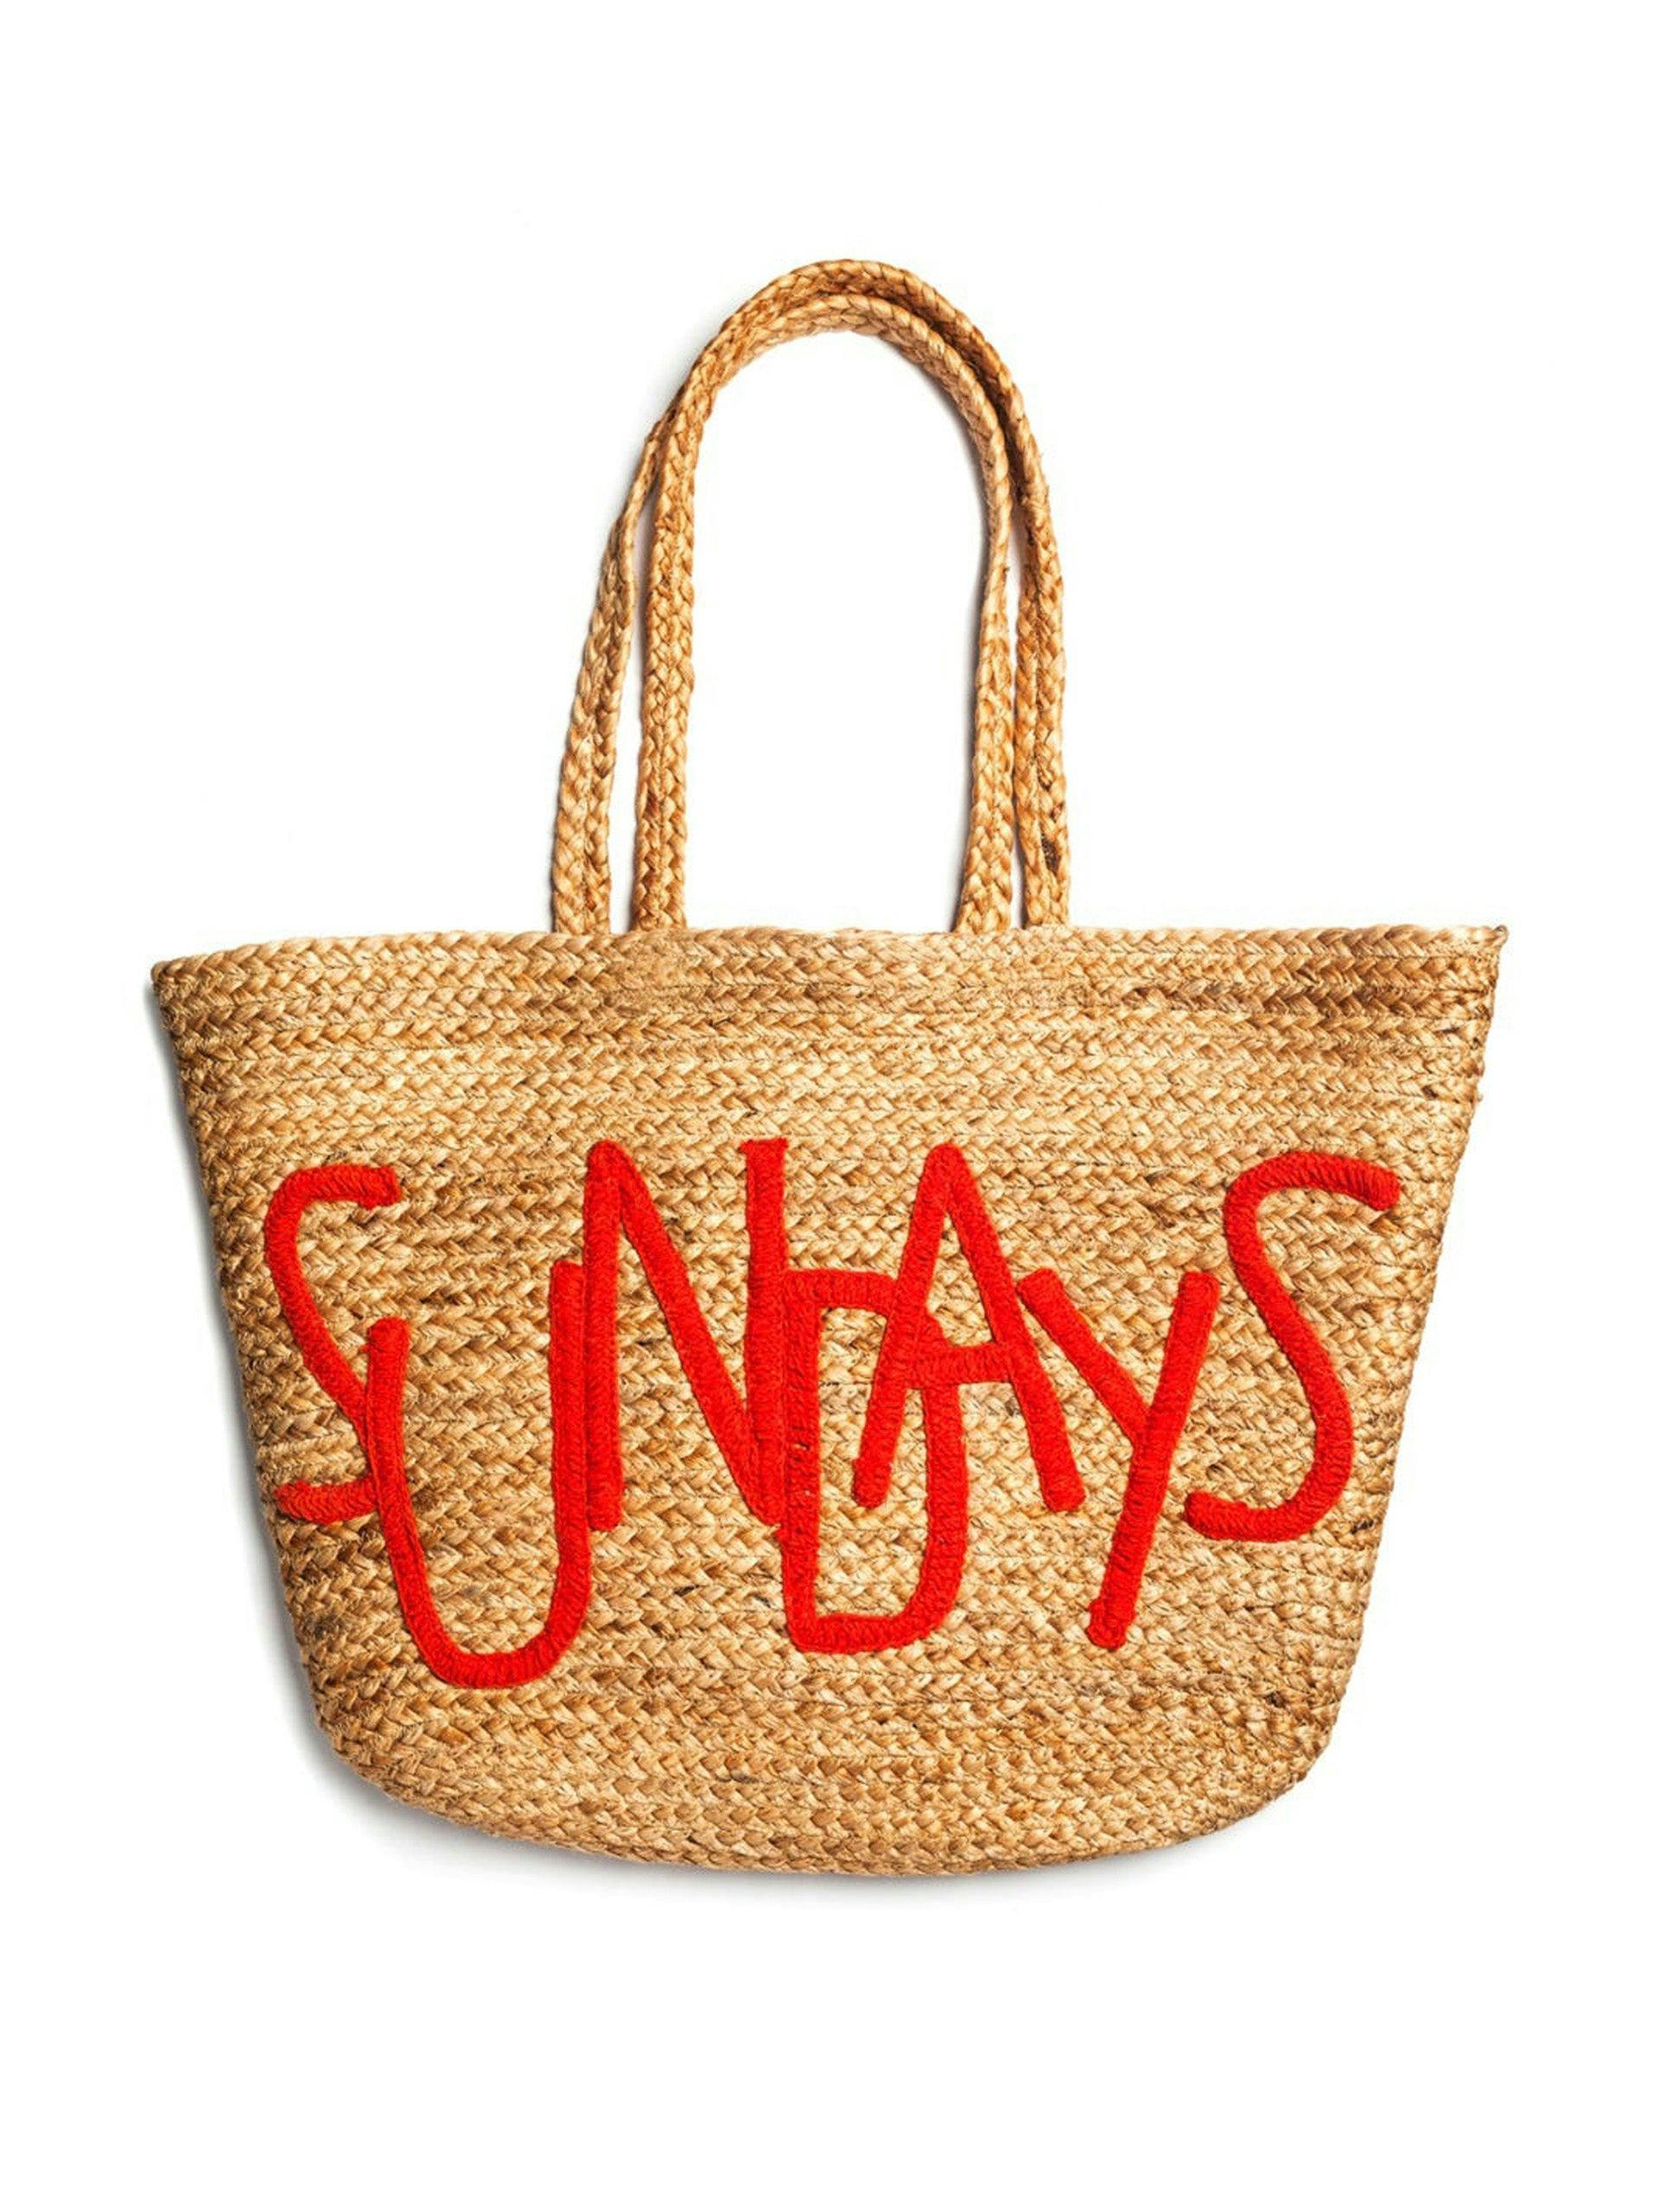 "Sunday's" Coral basket